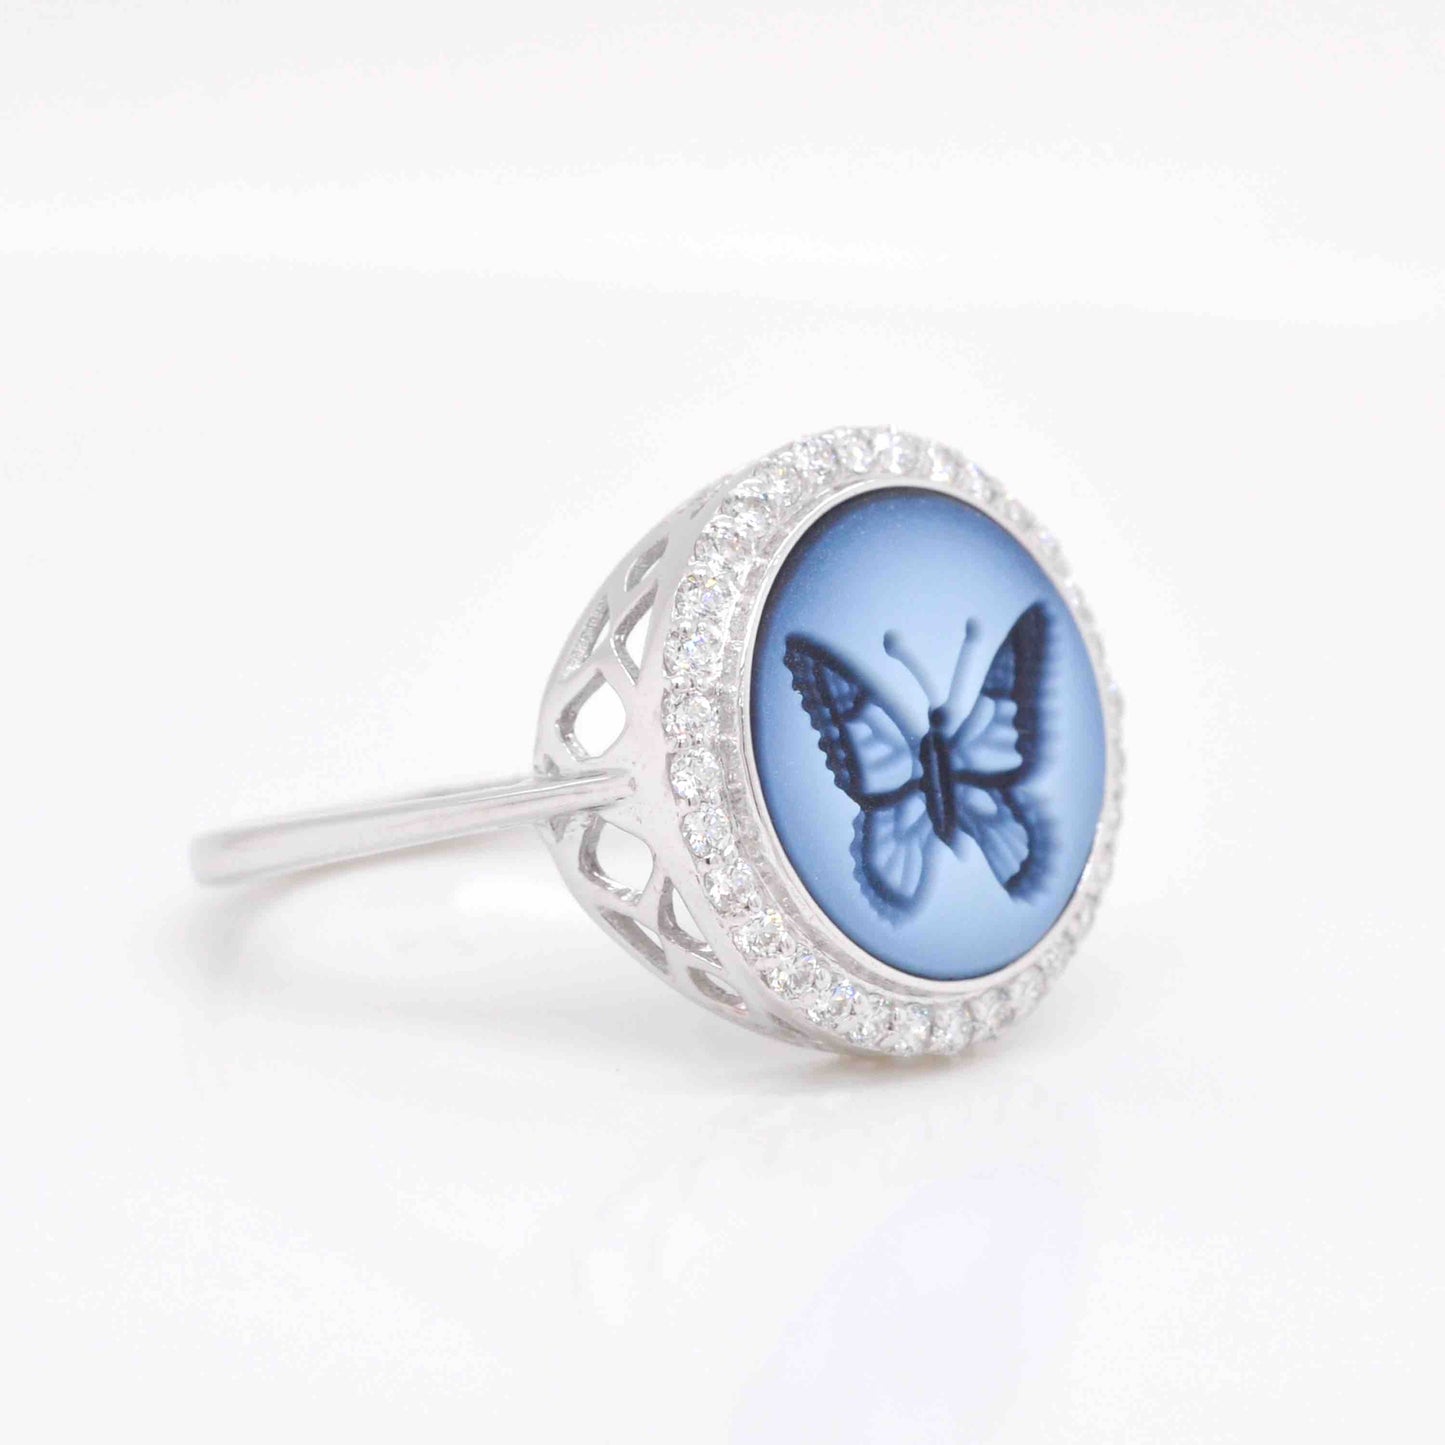 butterfly diamond ring